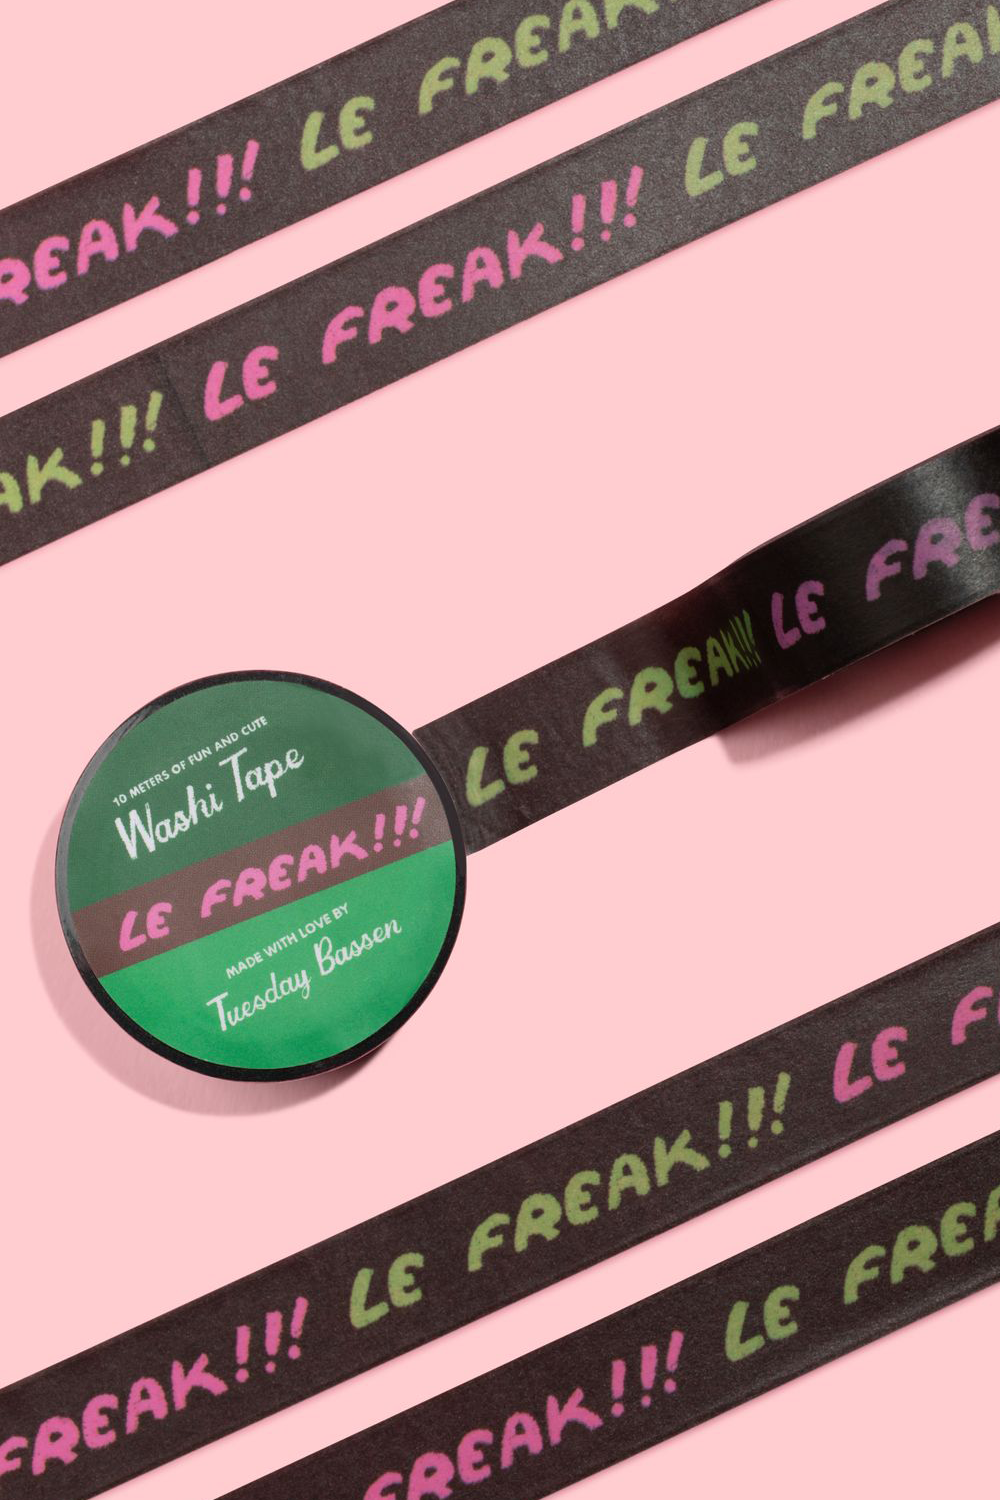 Le Freak!!! Washi Tape